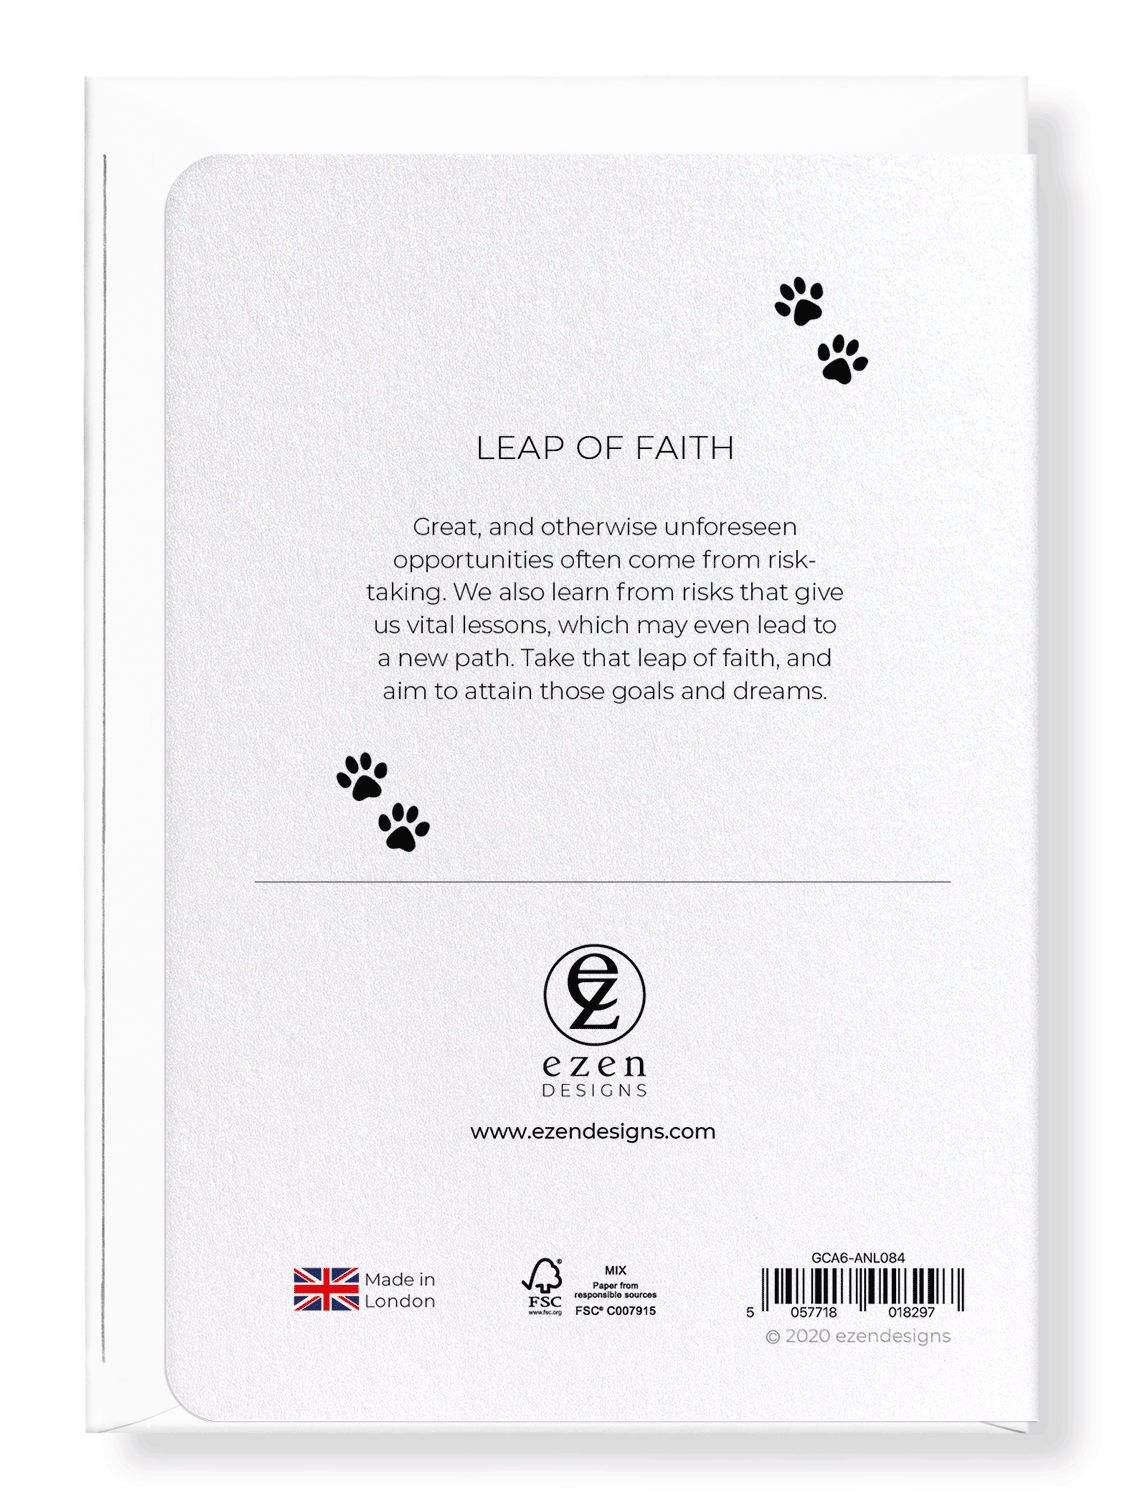 Ezen Designs - Leap of faith  - Greeting Card - Back